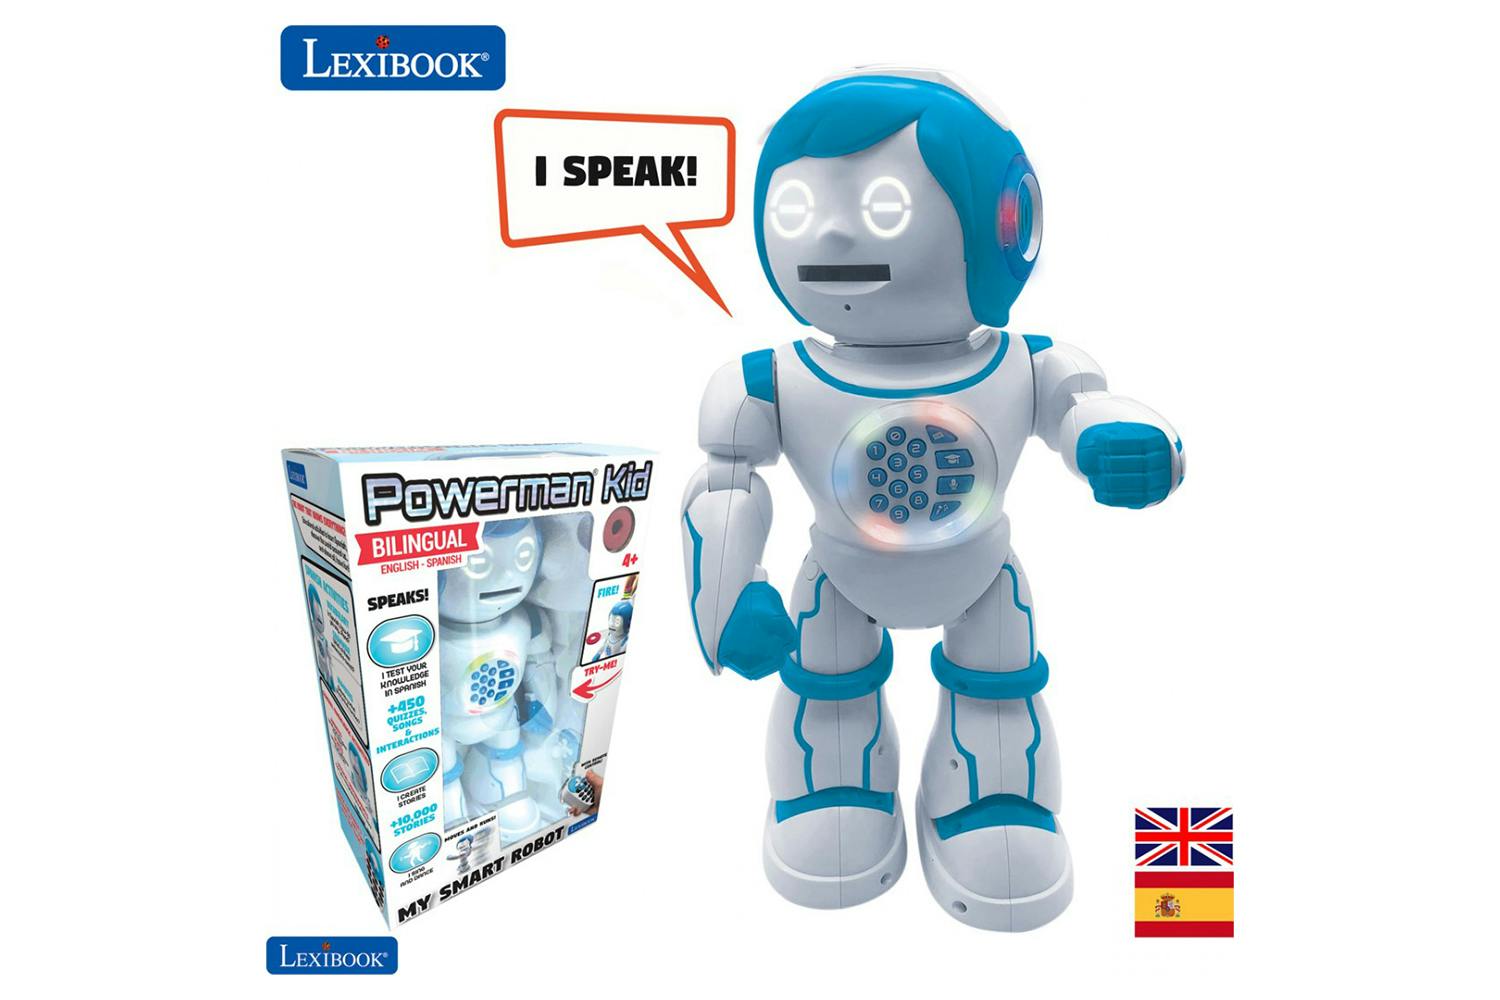 Lexibook ROB90EN Powerman Kid Educational and Bilingual English/Spanish Robot